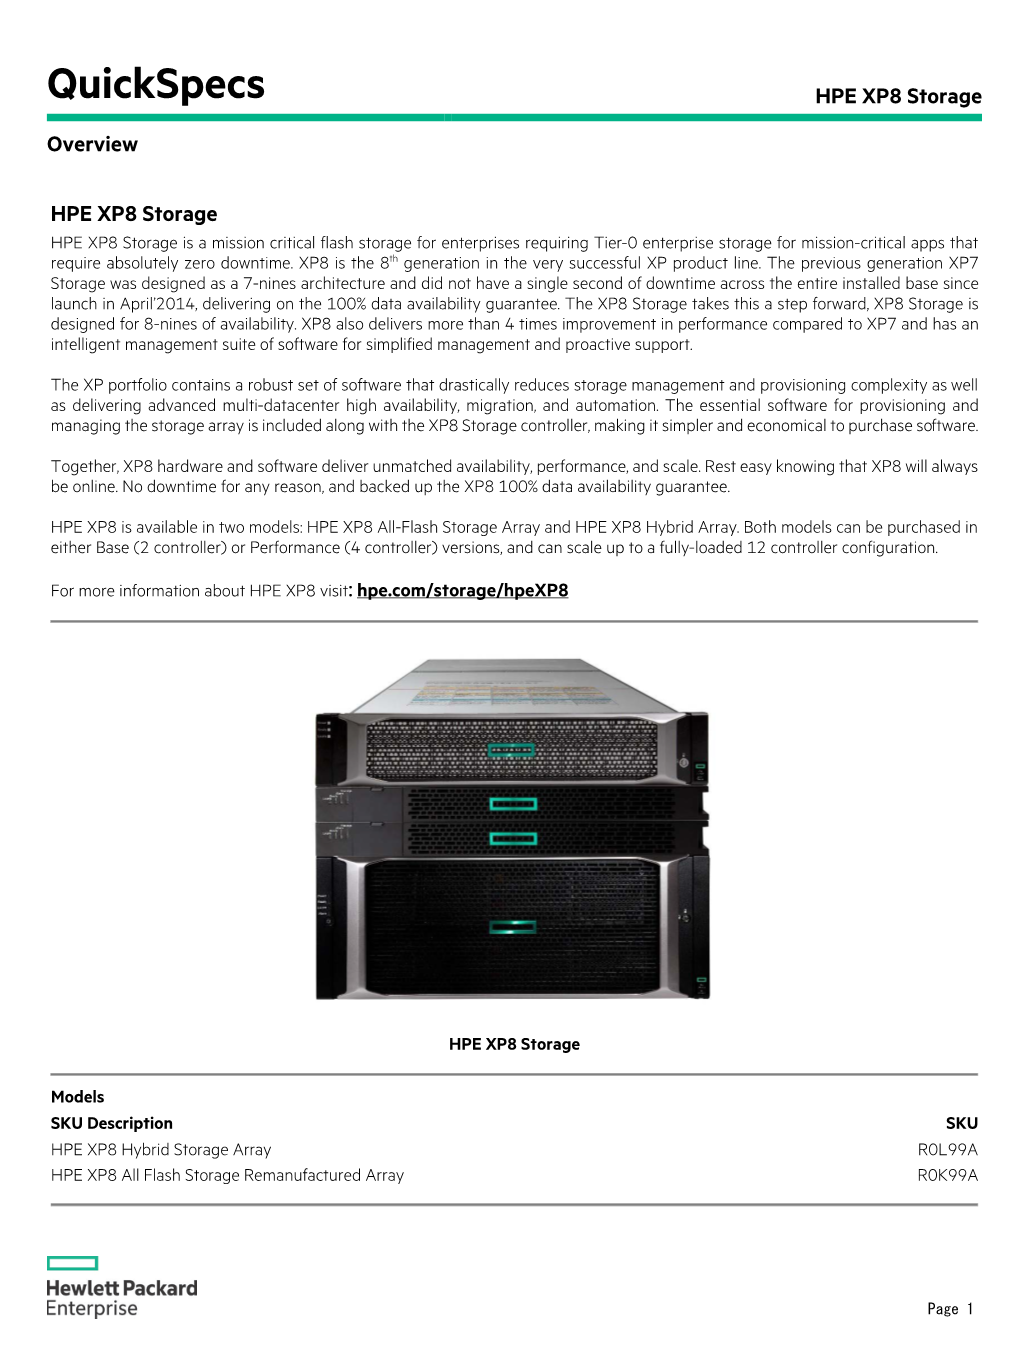 HPE XP8 Storage Family